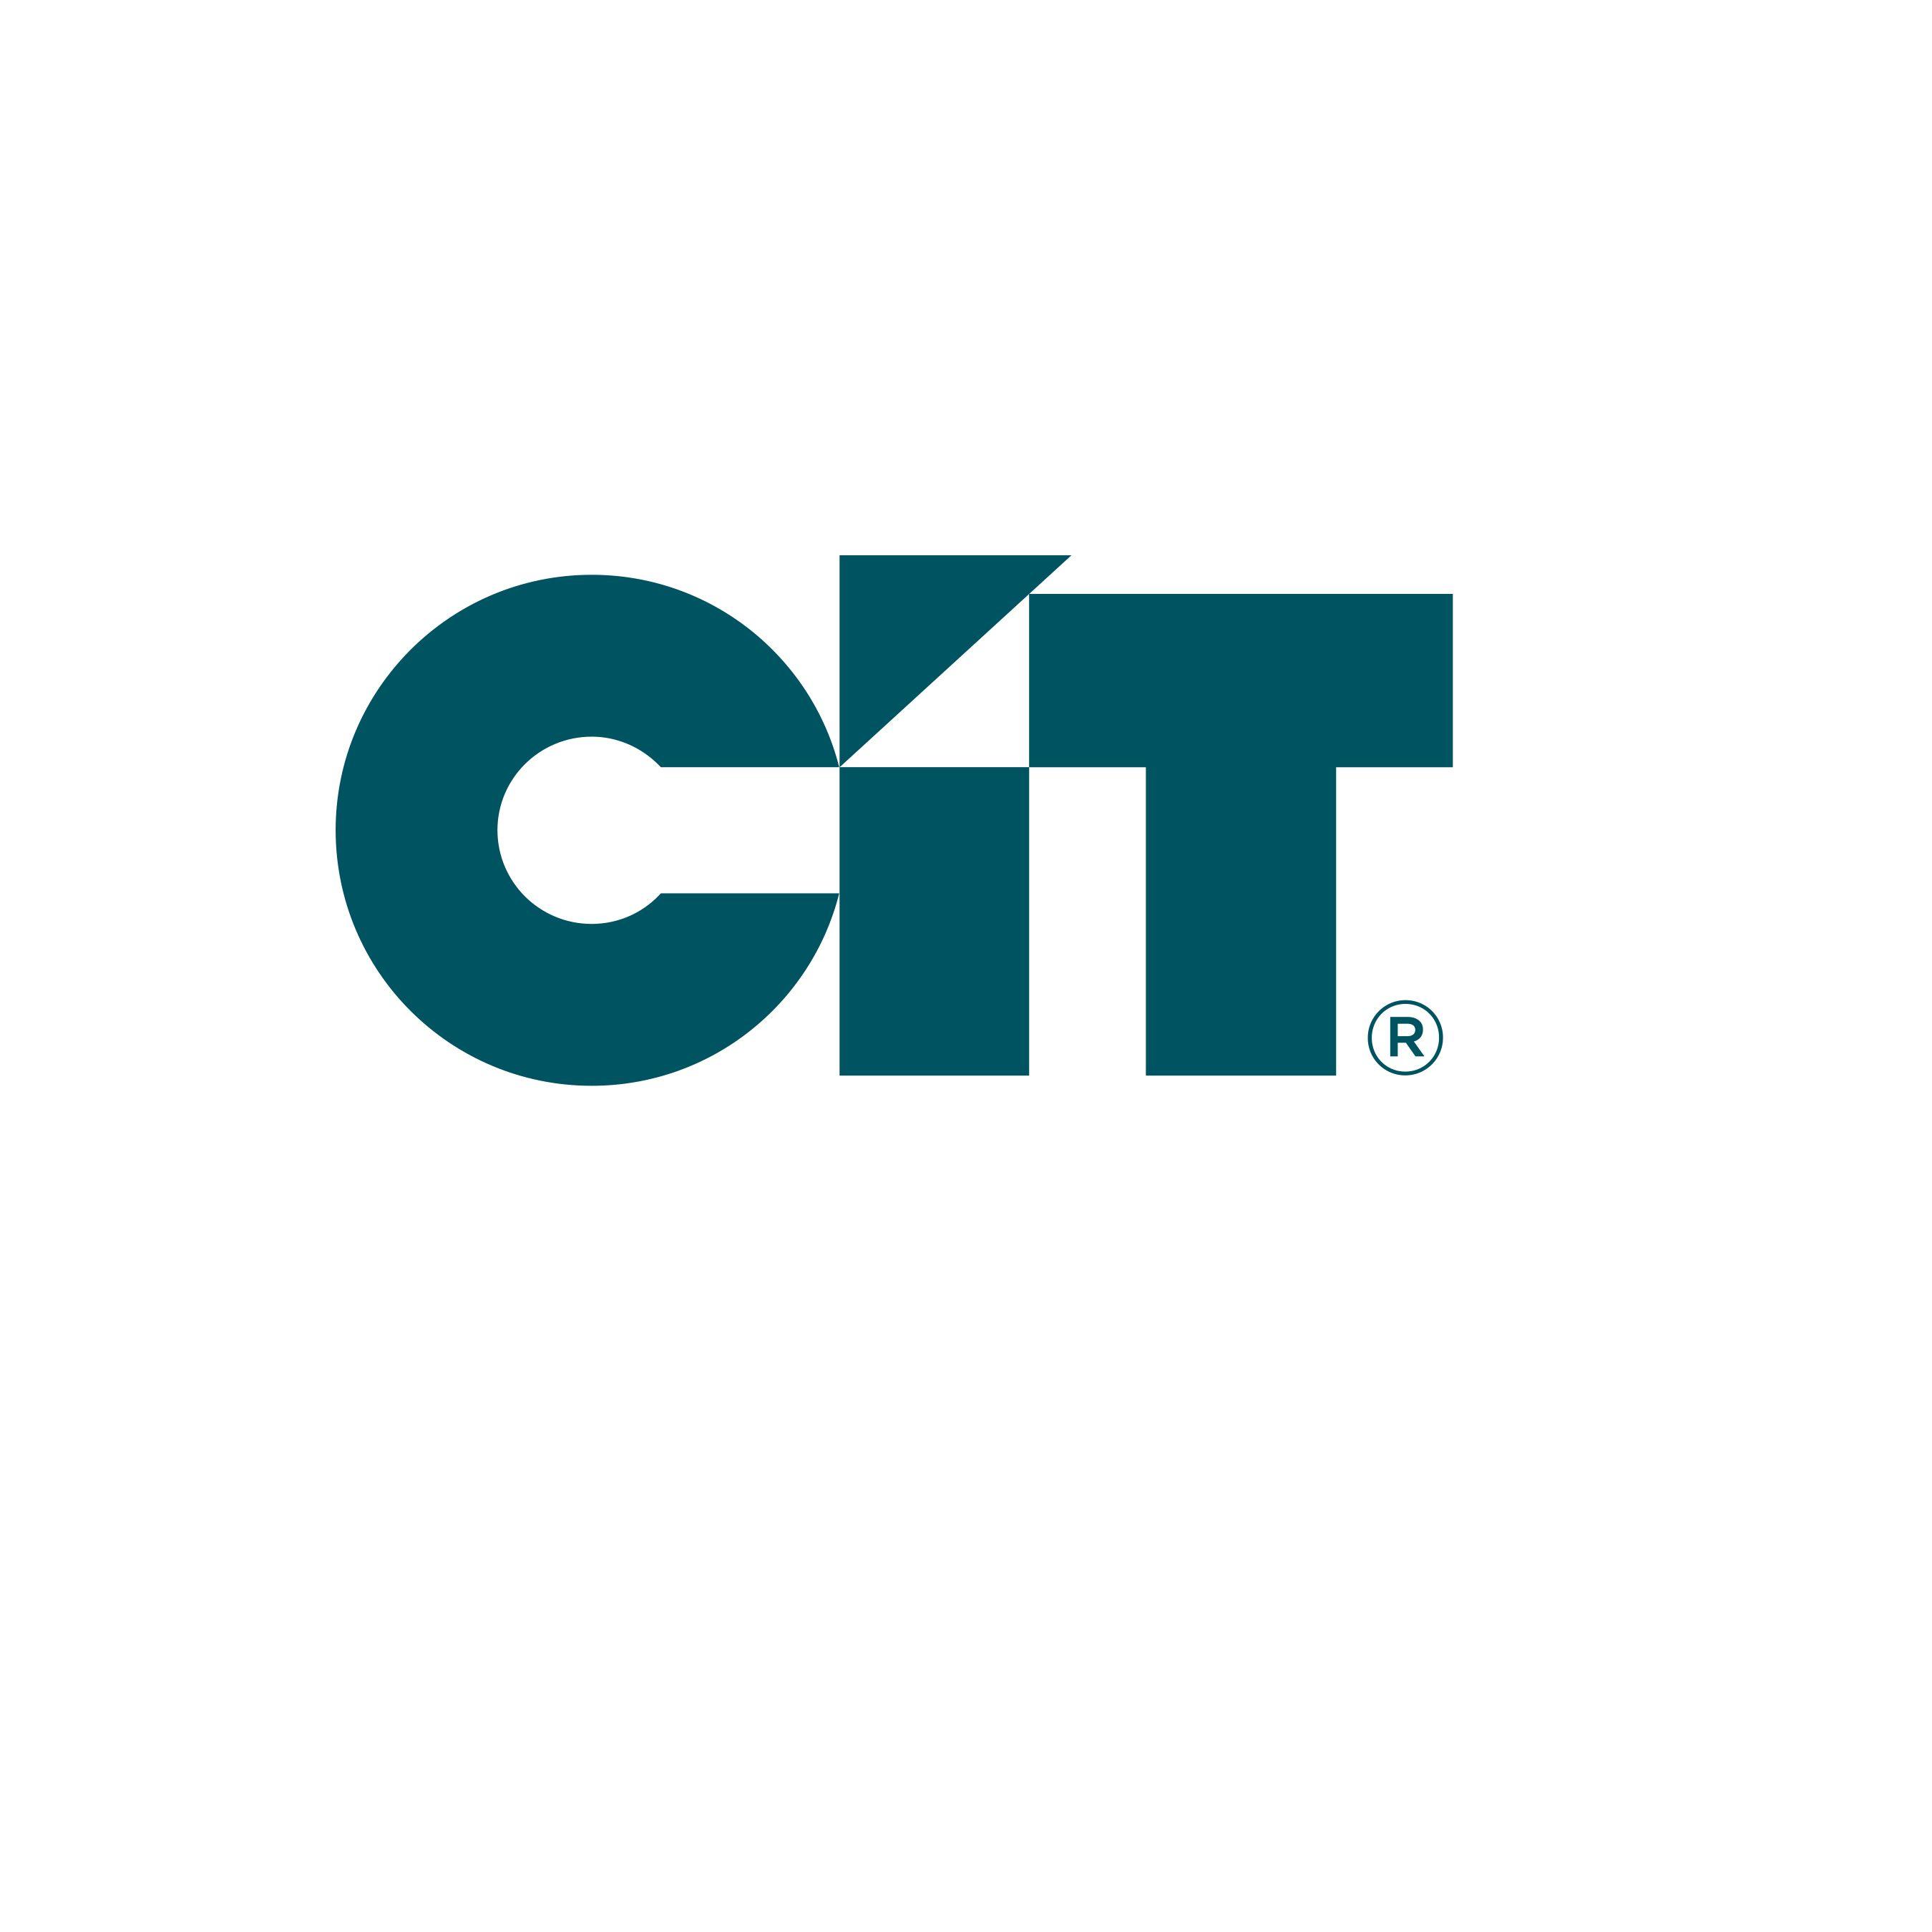 CIT Logo - CIT Reveals New Brand Identity Focused on Empowering Customers